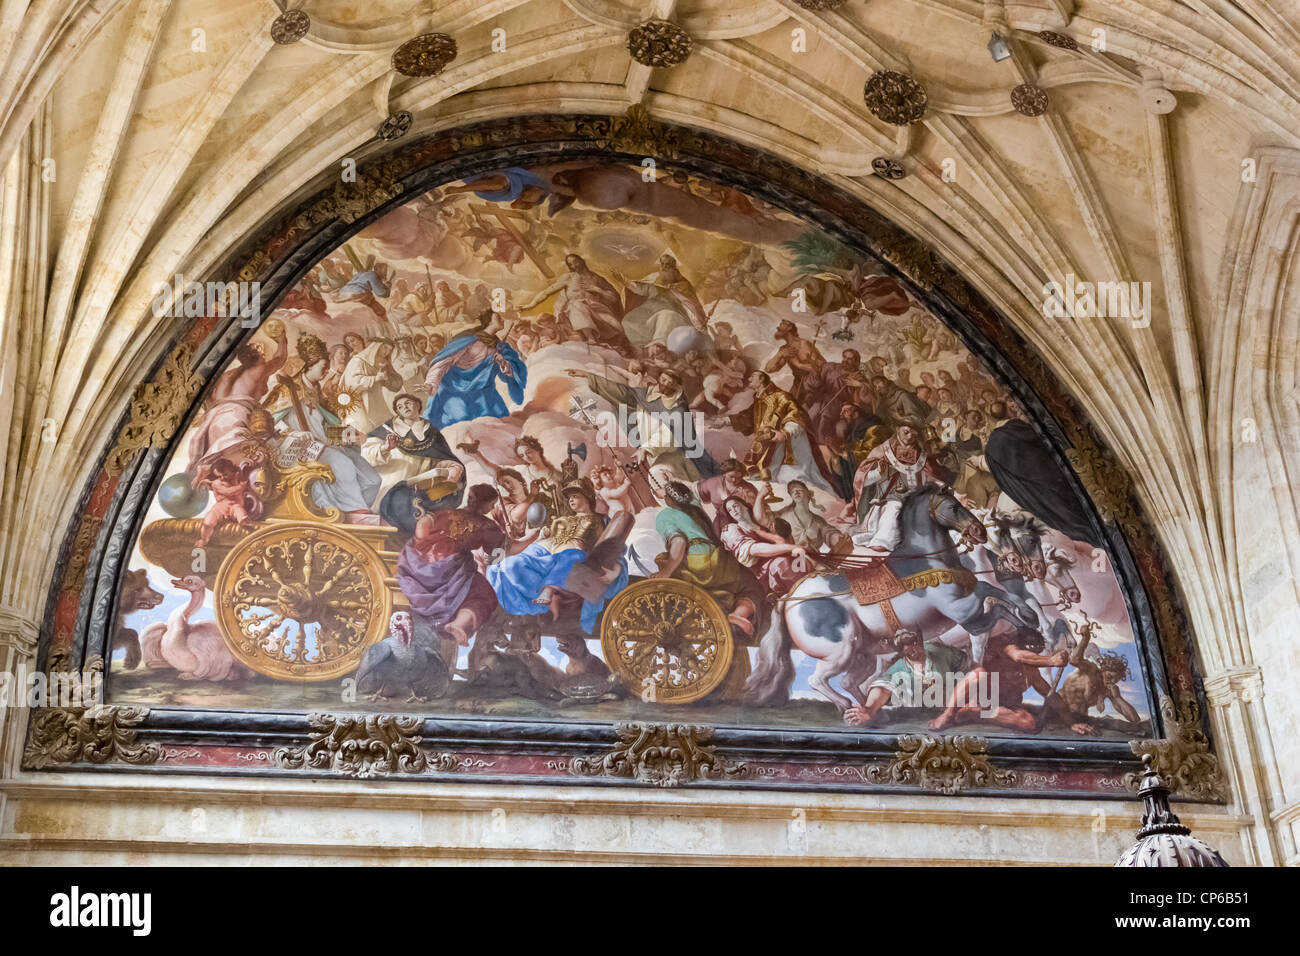 Salamanca - Triumph of the Church - Convento de San Esteban (Convent of St. Stephen) Stock Photo